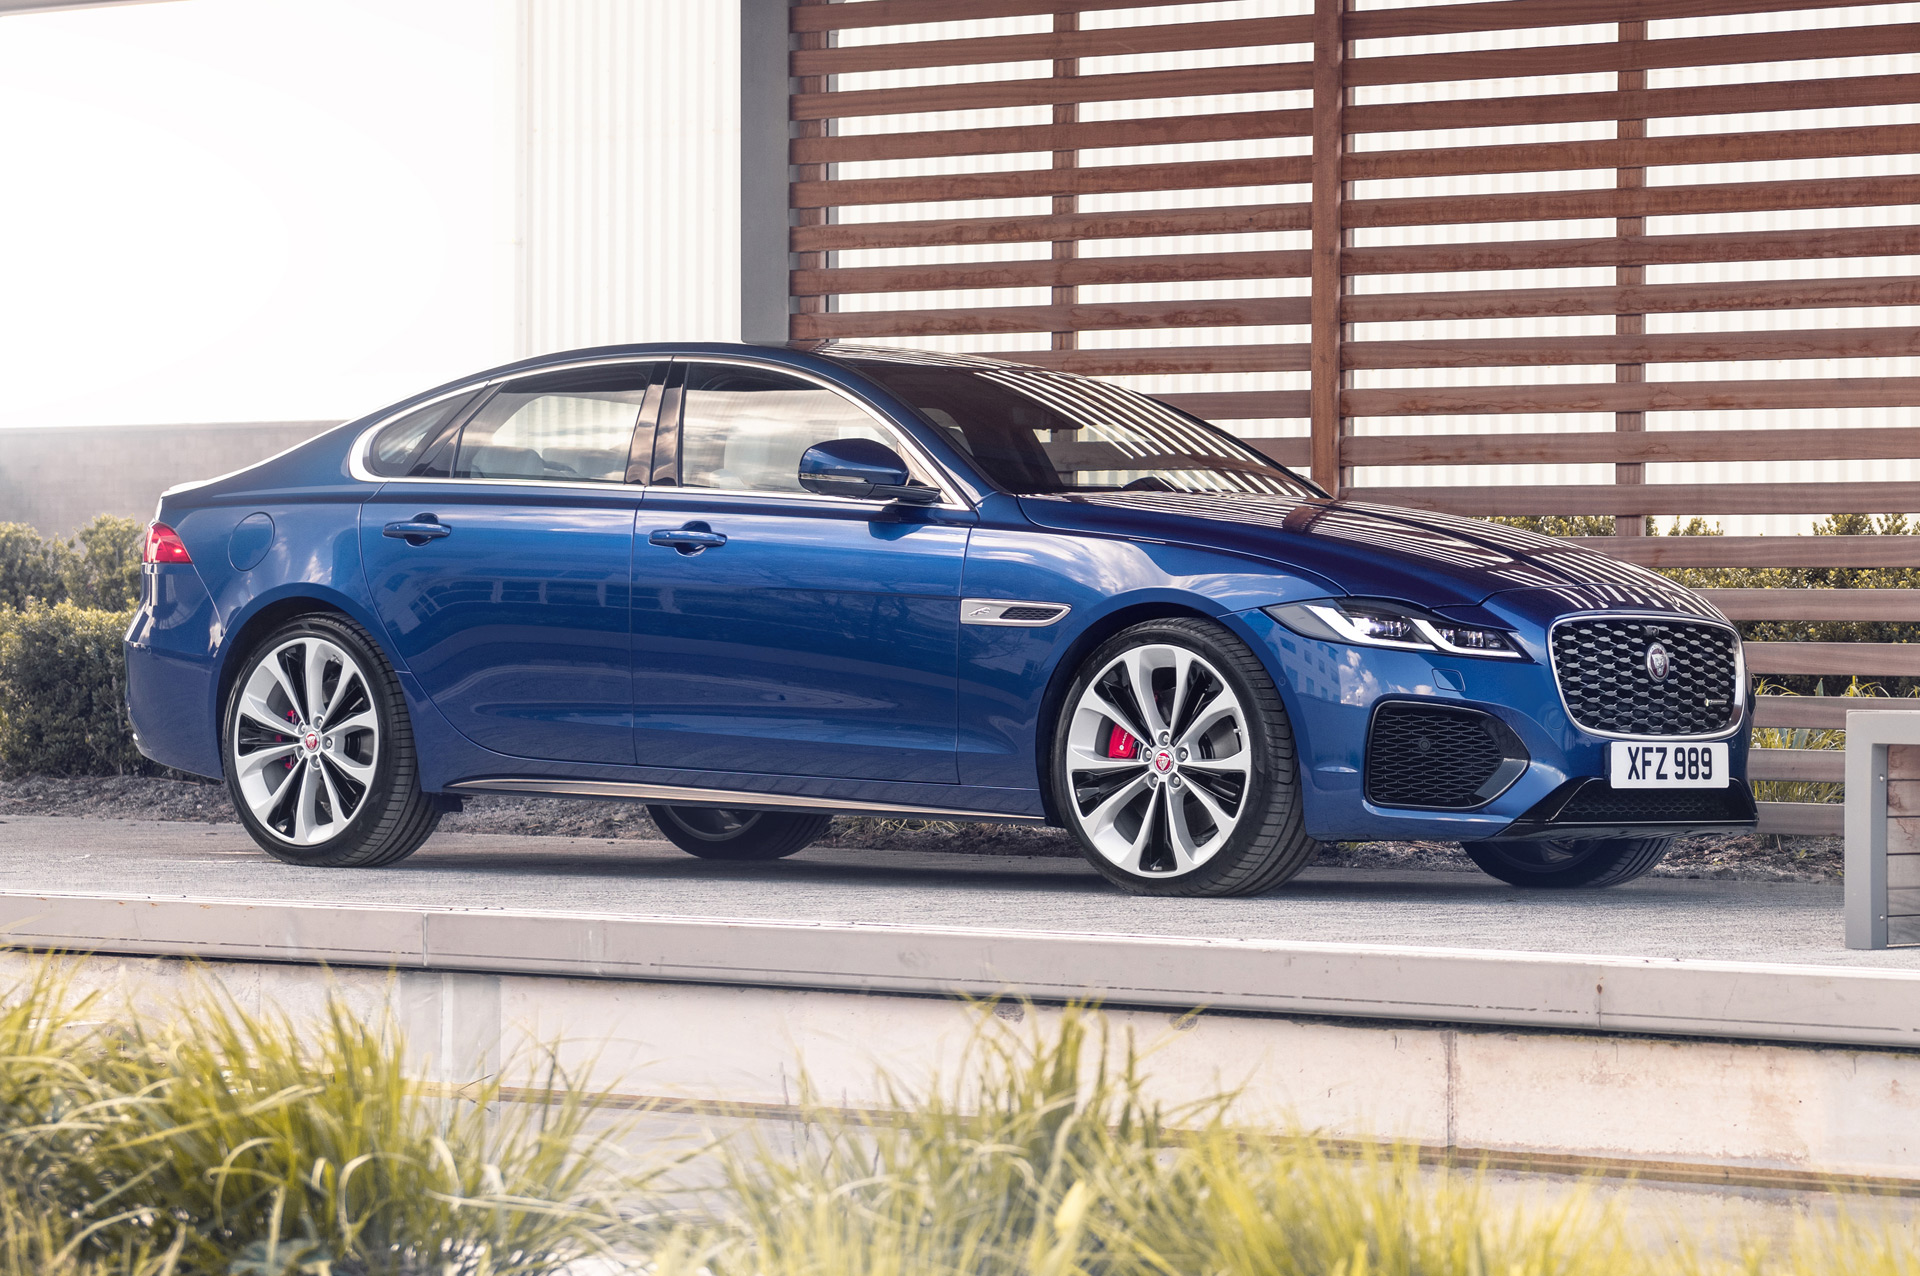 2021 Jaguar XF Interior, New Jaguar XF Design